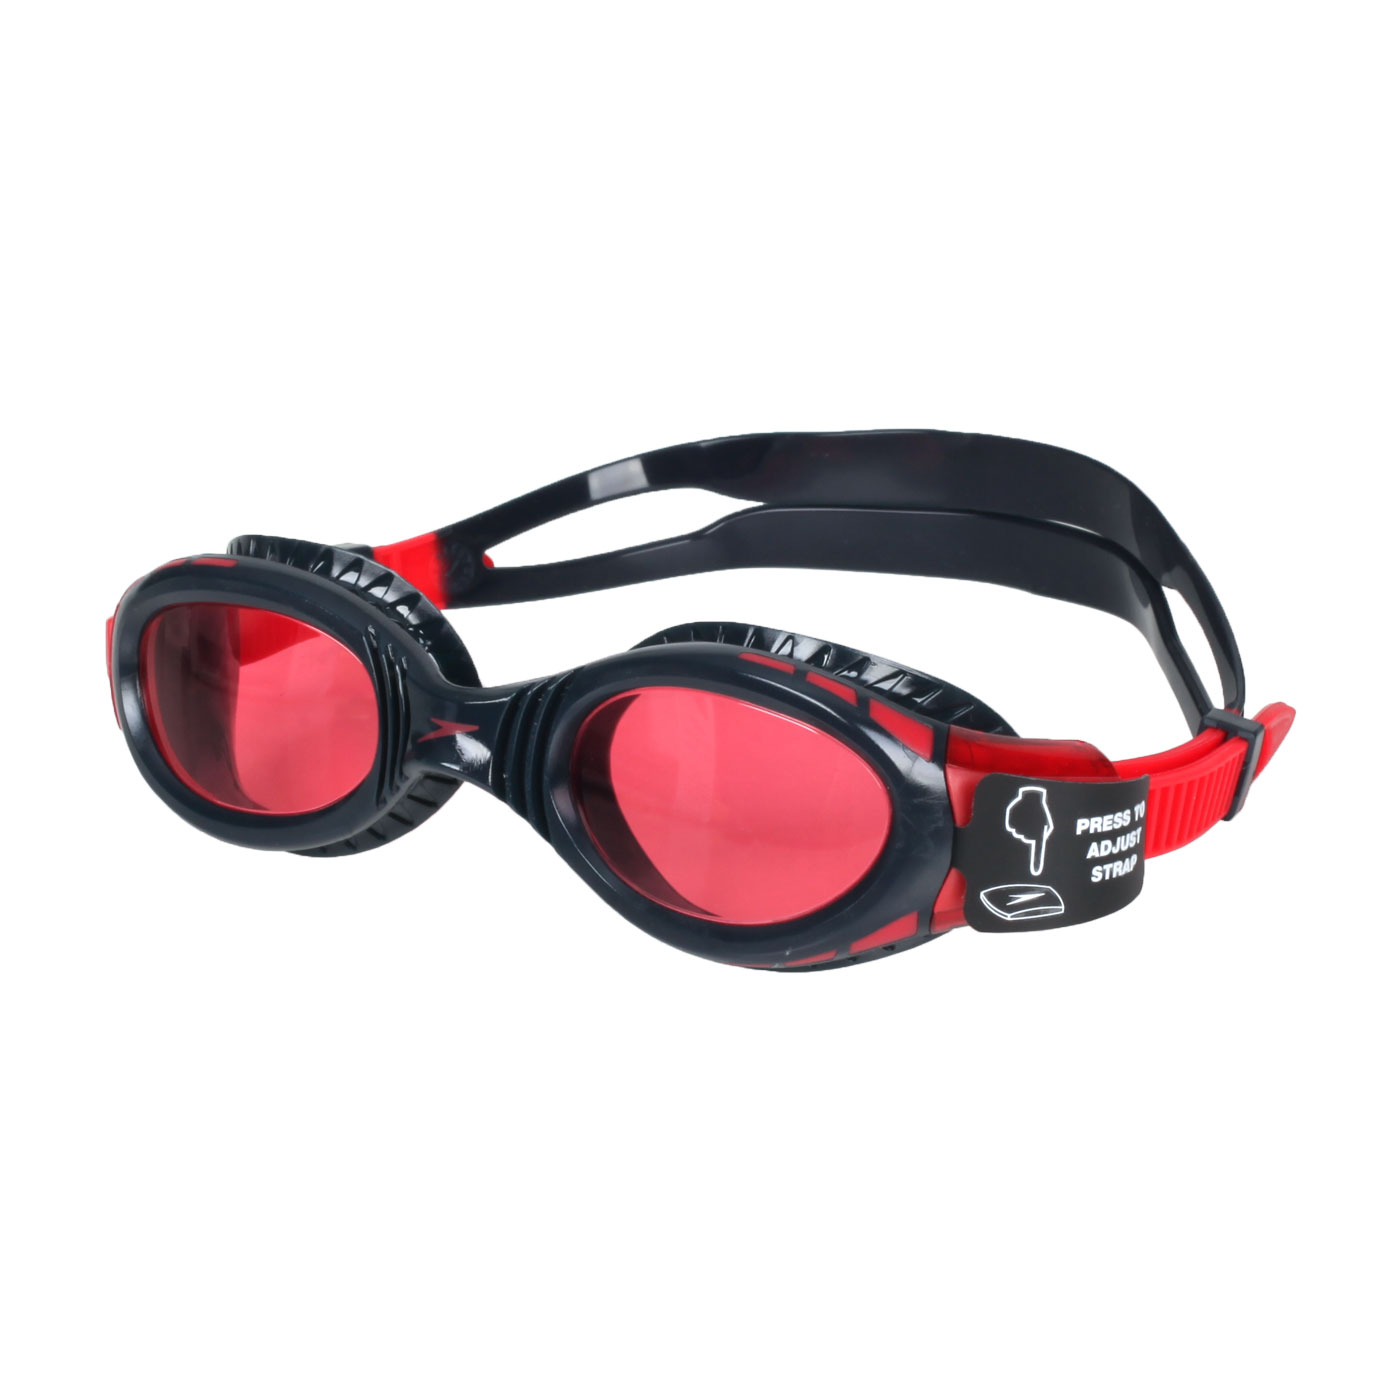 SPEEDO 兒童運動泳鏡 Biofuse Flexiseal SD811595D835 - 黑紅